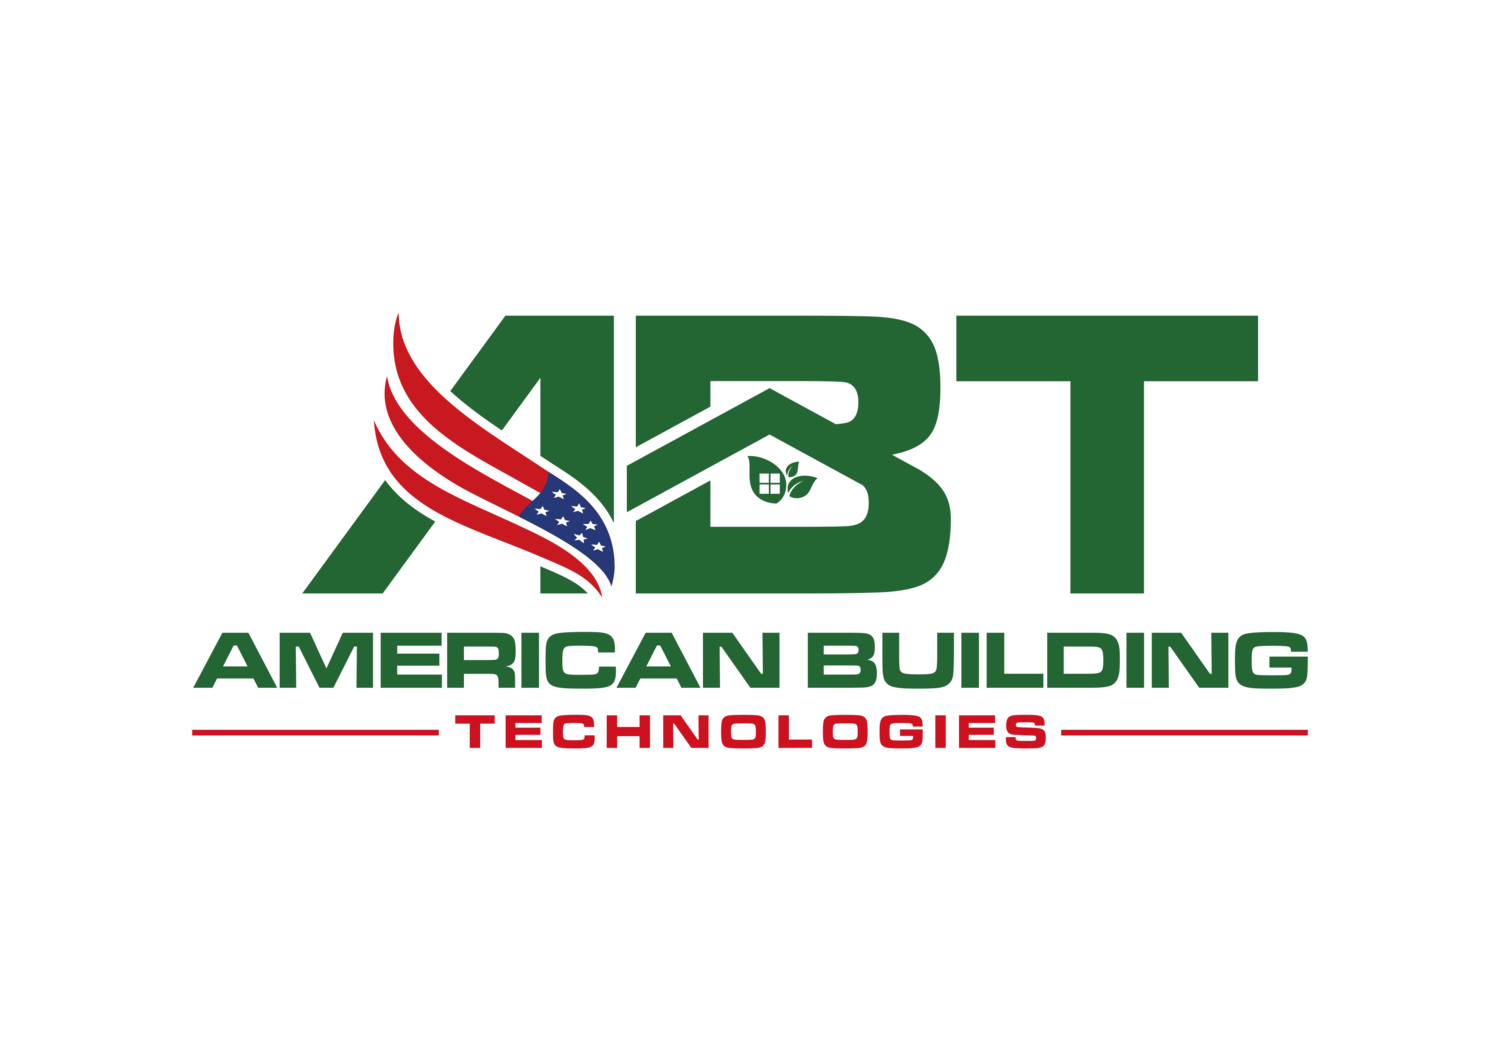 American Building Technologies